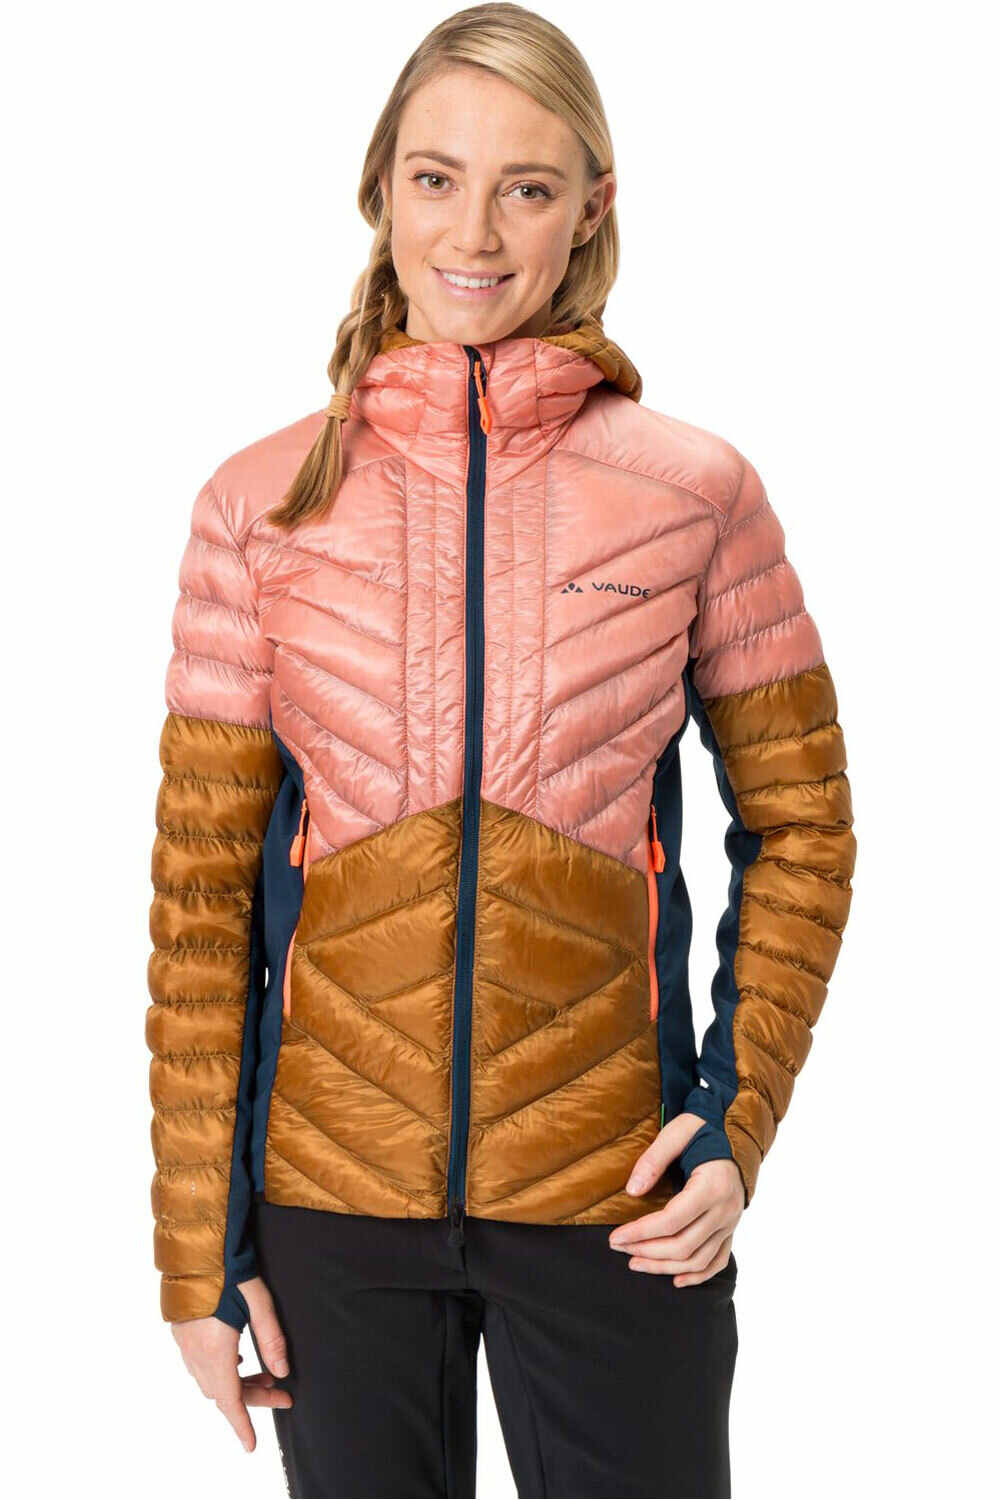 Vaude chaqueta outdoor mujer Women's Sesvenna Pro Jacket II vista frontal